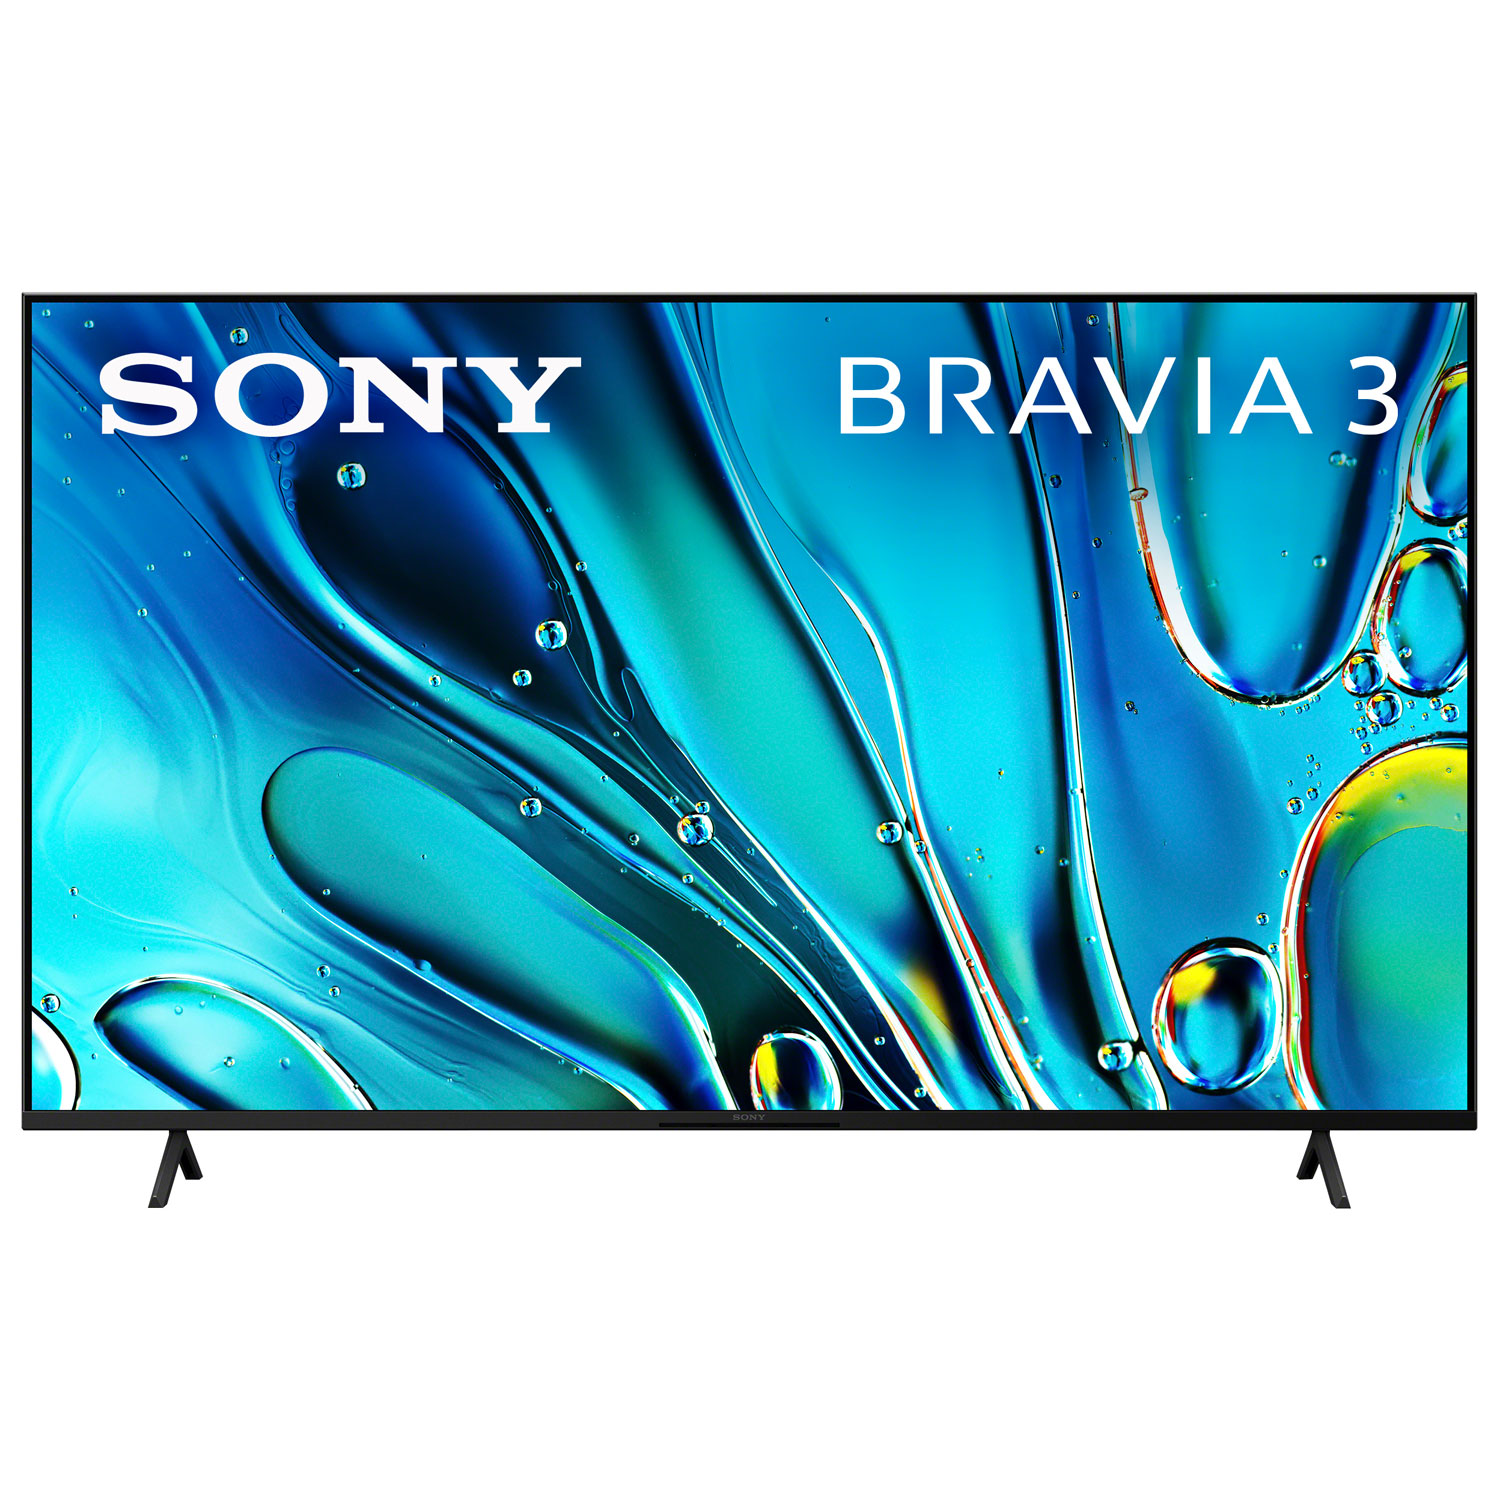 Sony Bravia 3 65" 4K UHD HDR LED Smart Google TV (K65S30B) - 2024